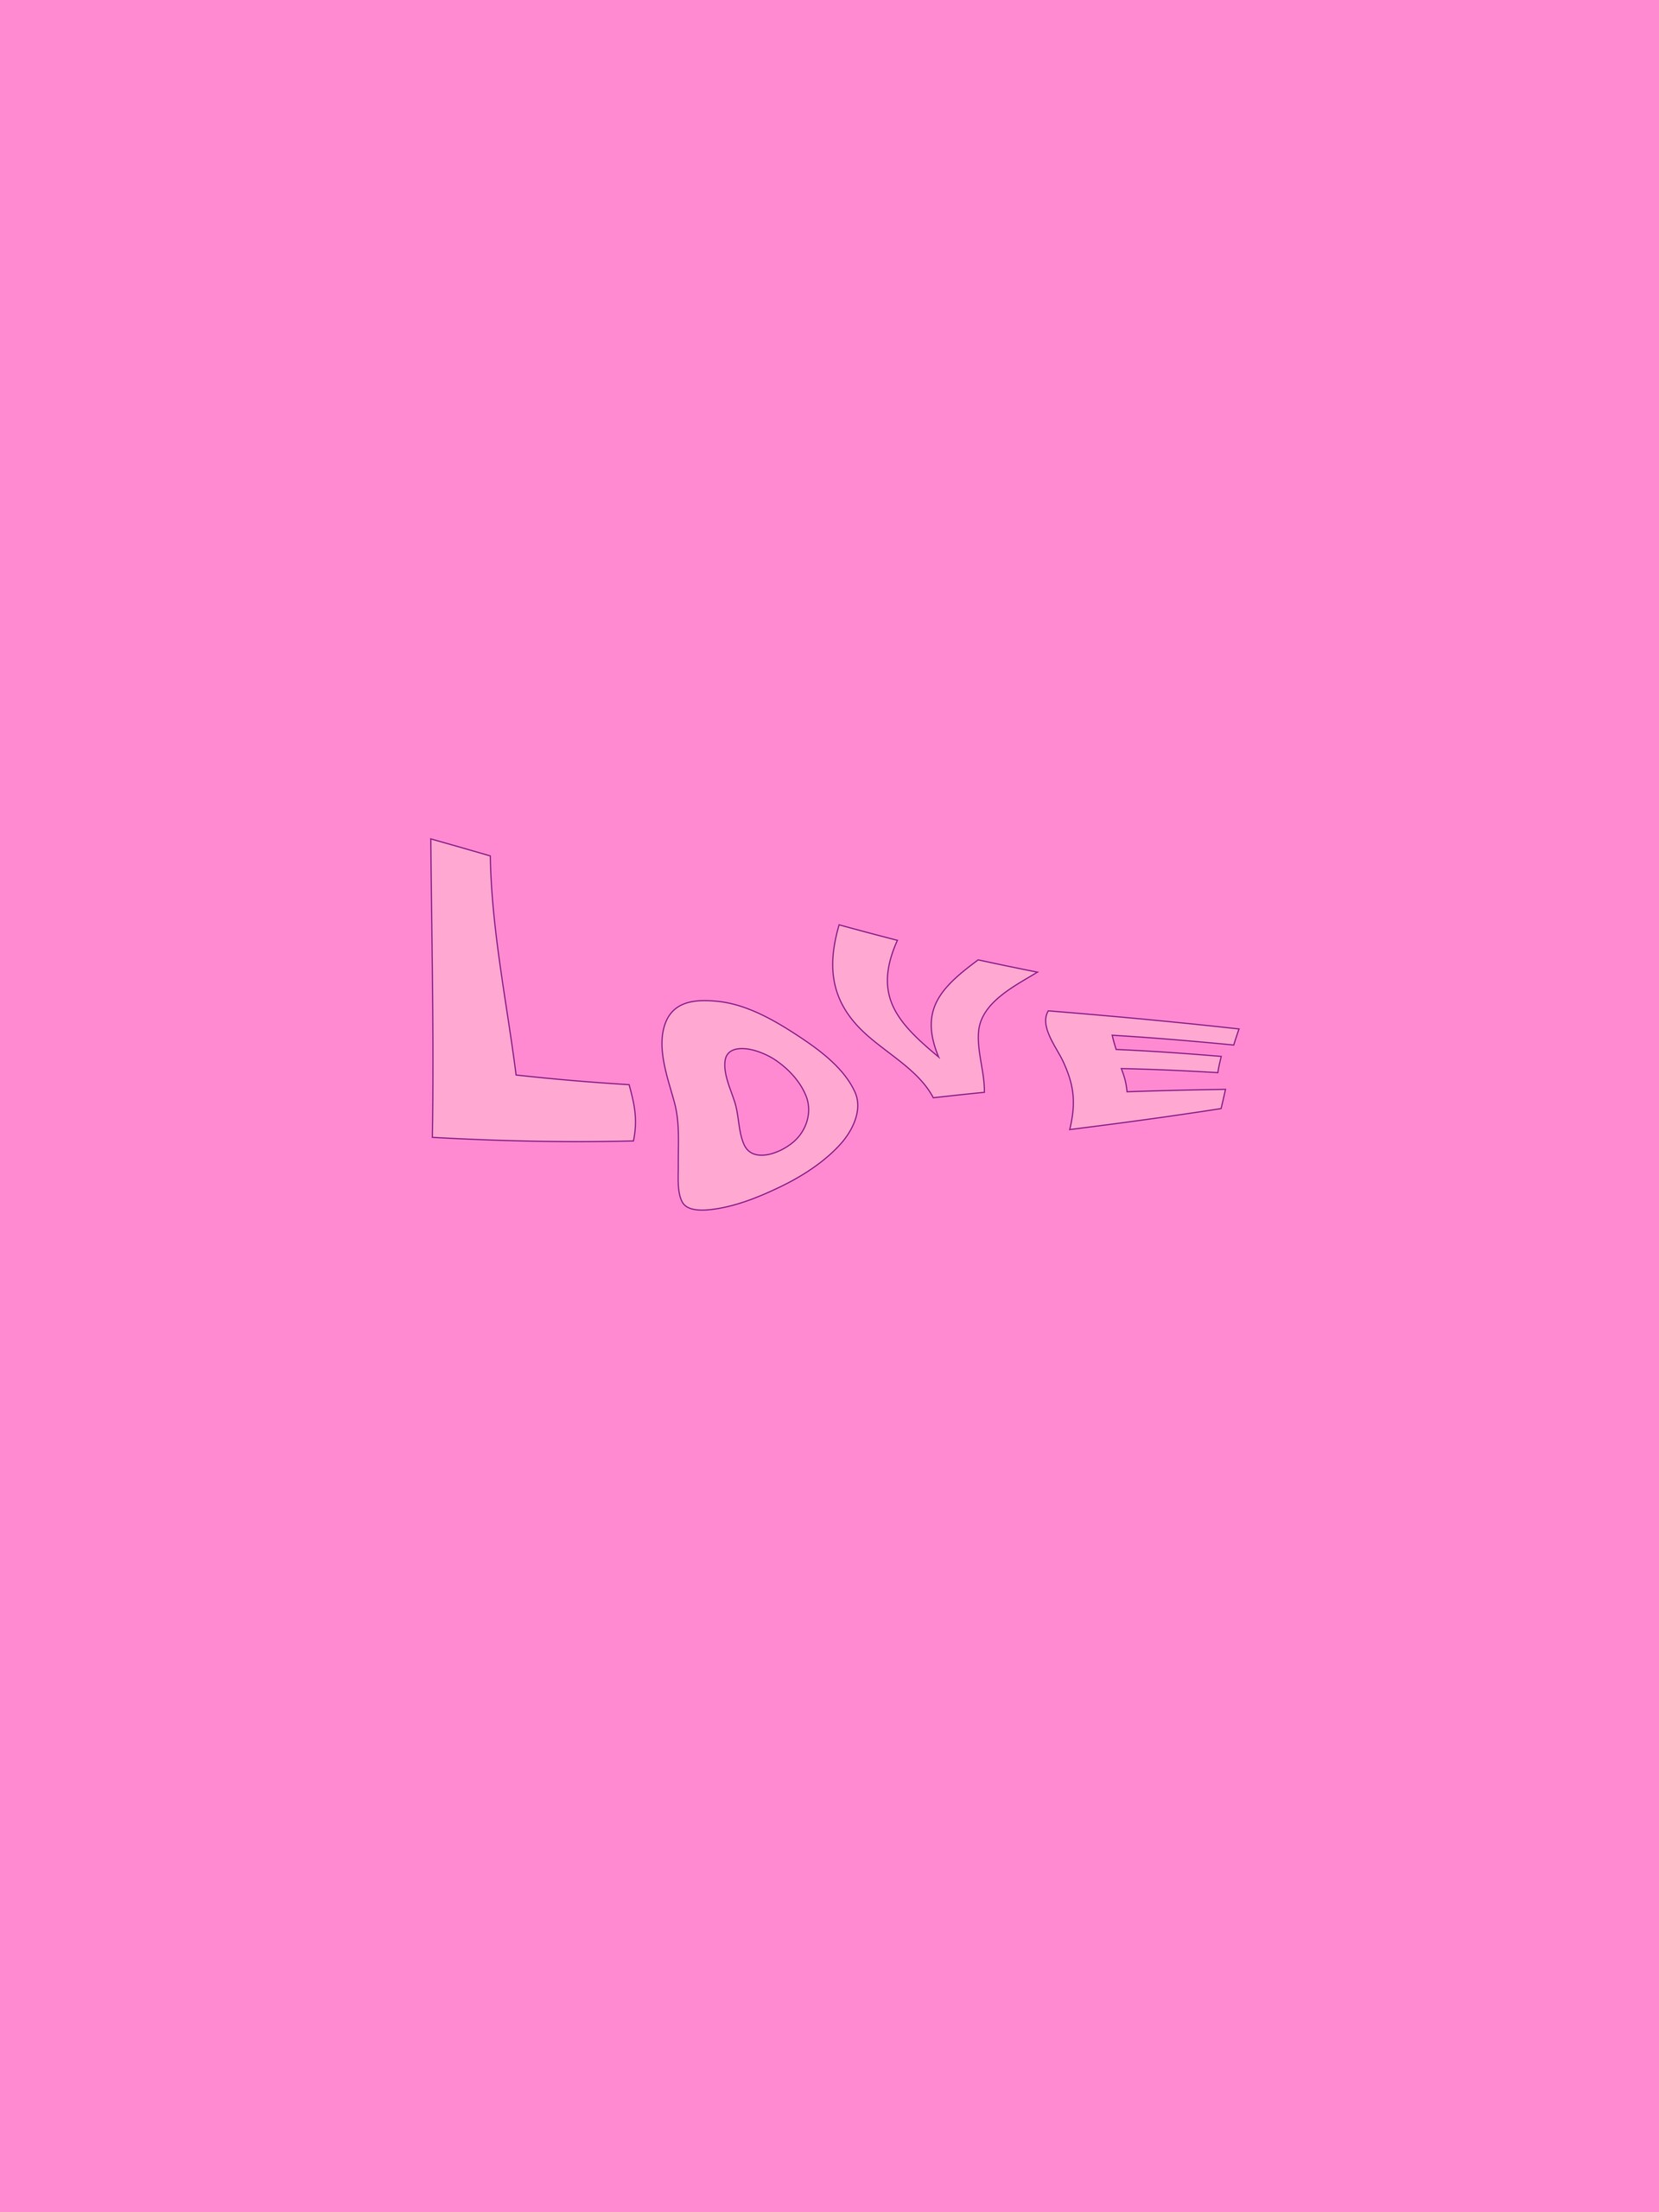 ArtStation - “Love”